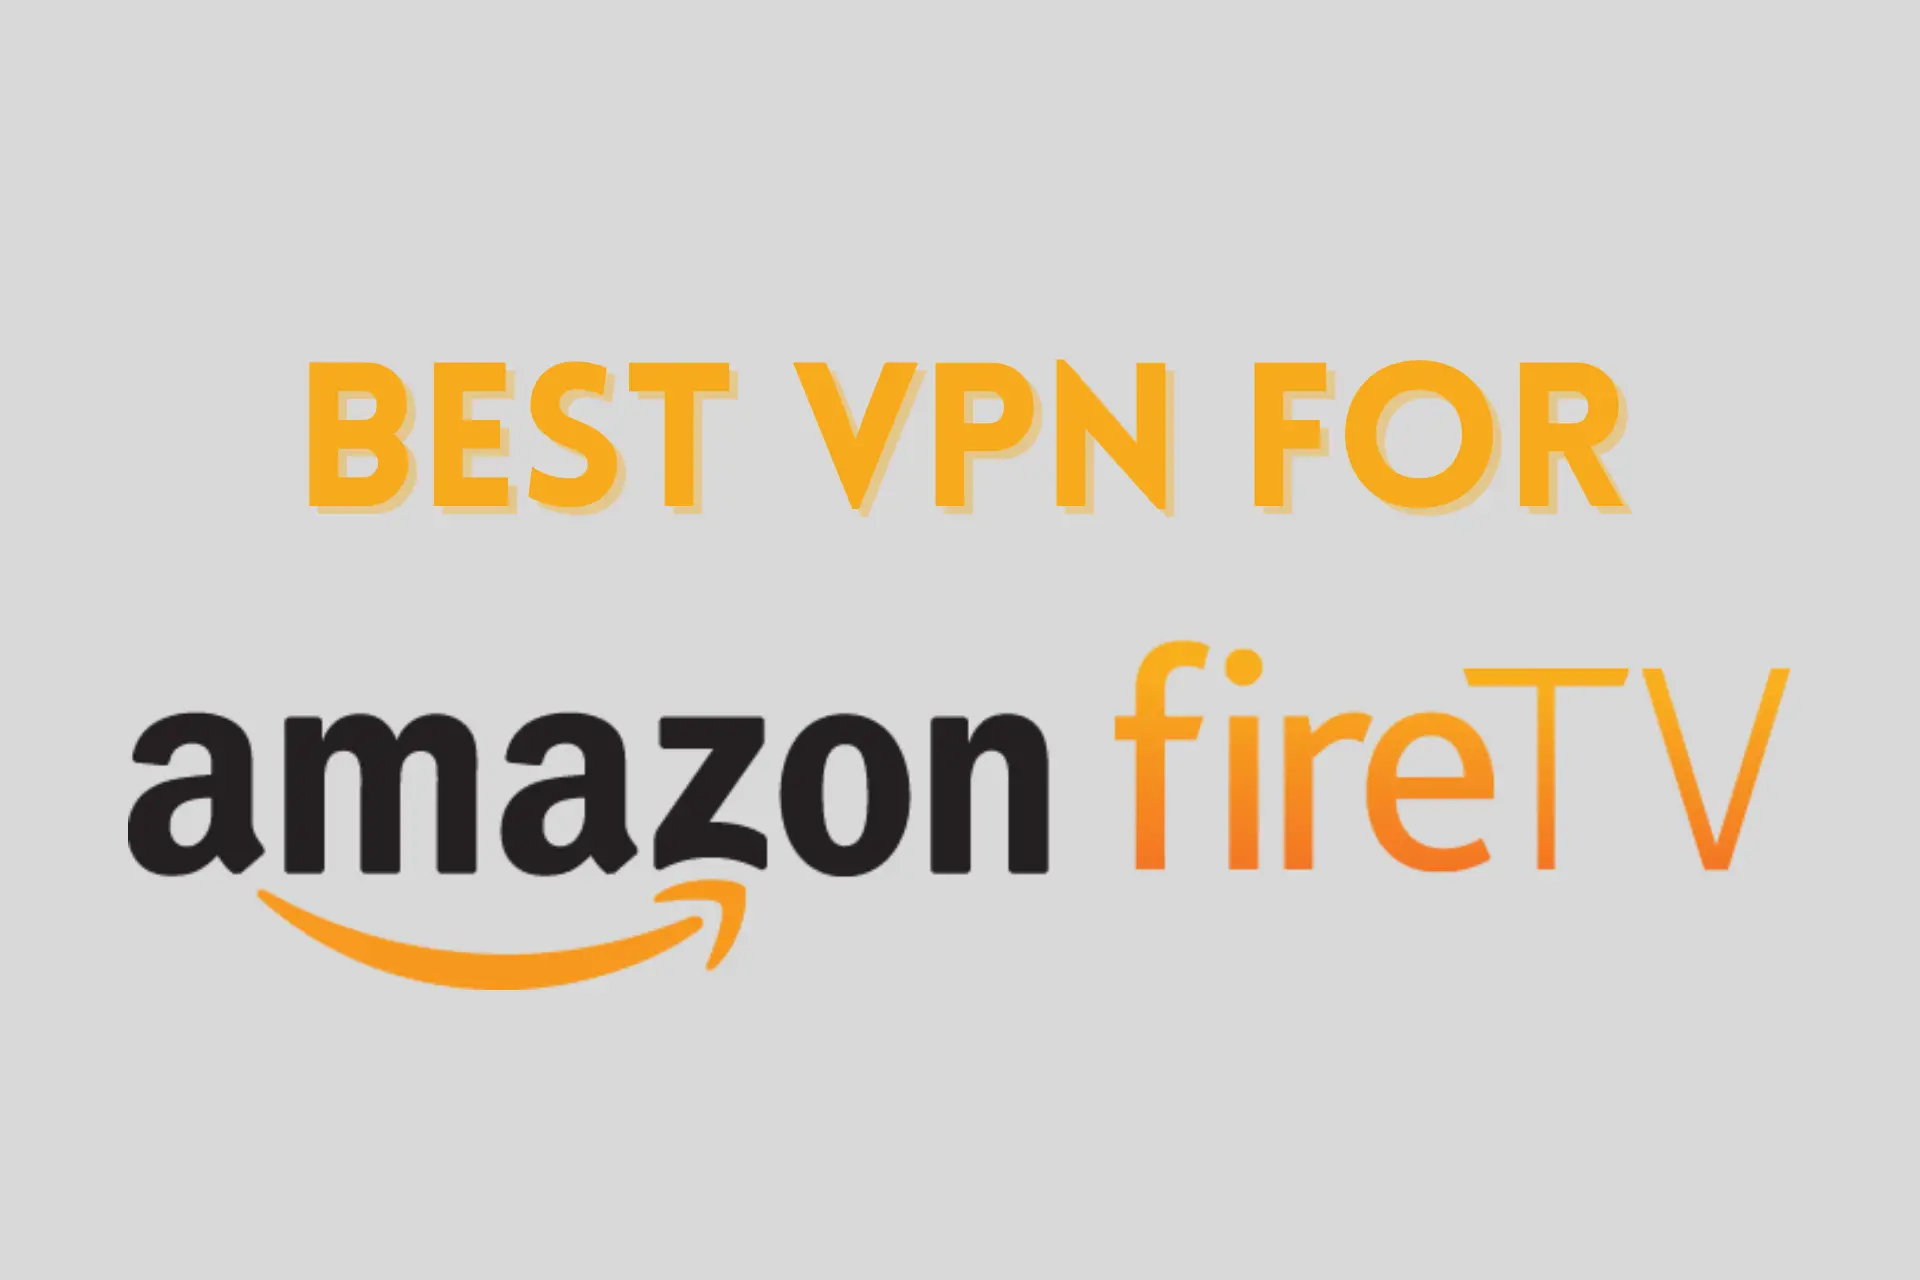 BEST VPN FOR AMAZON FIRE TV